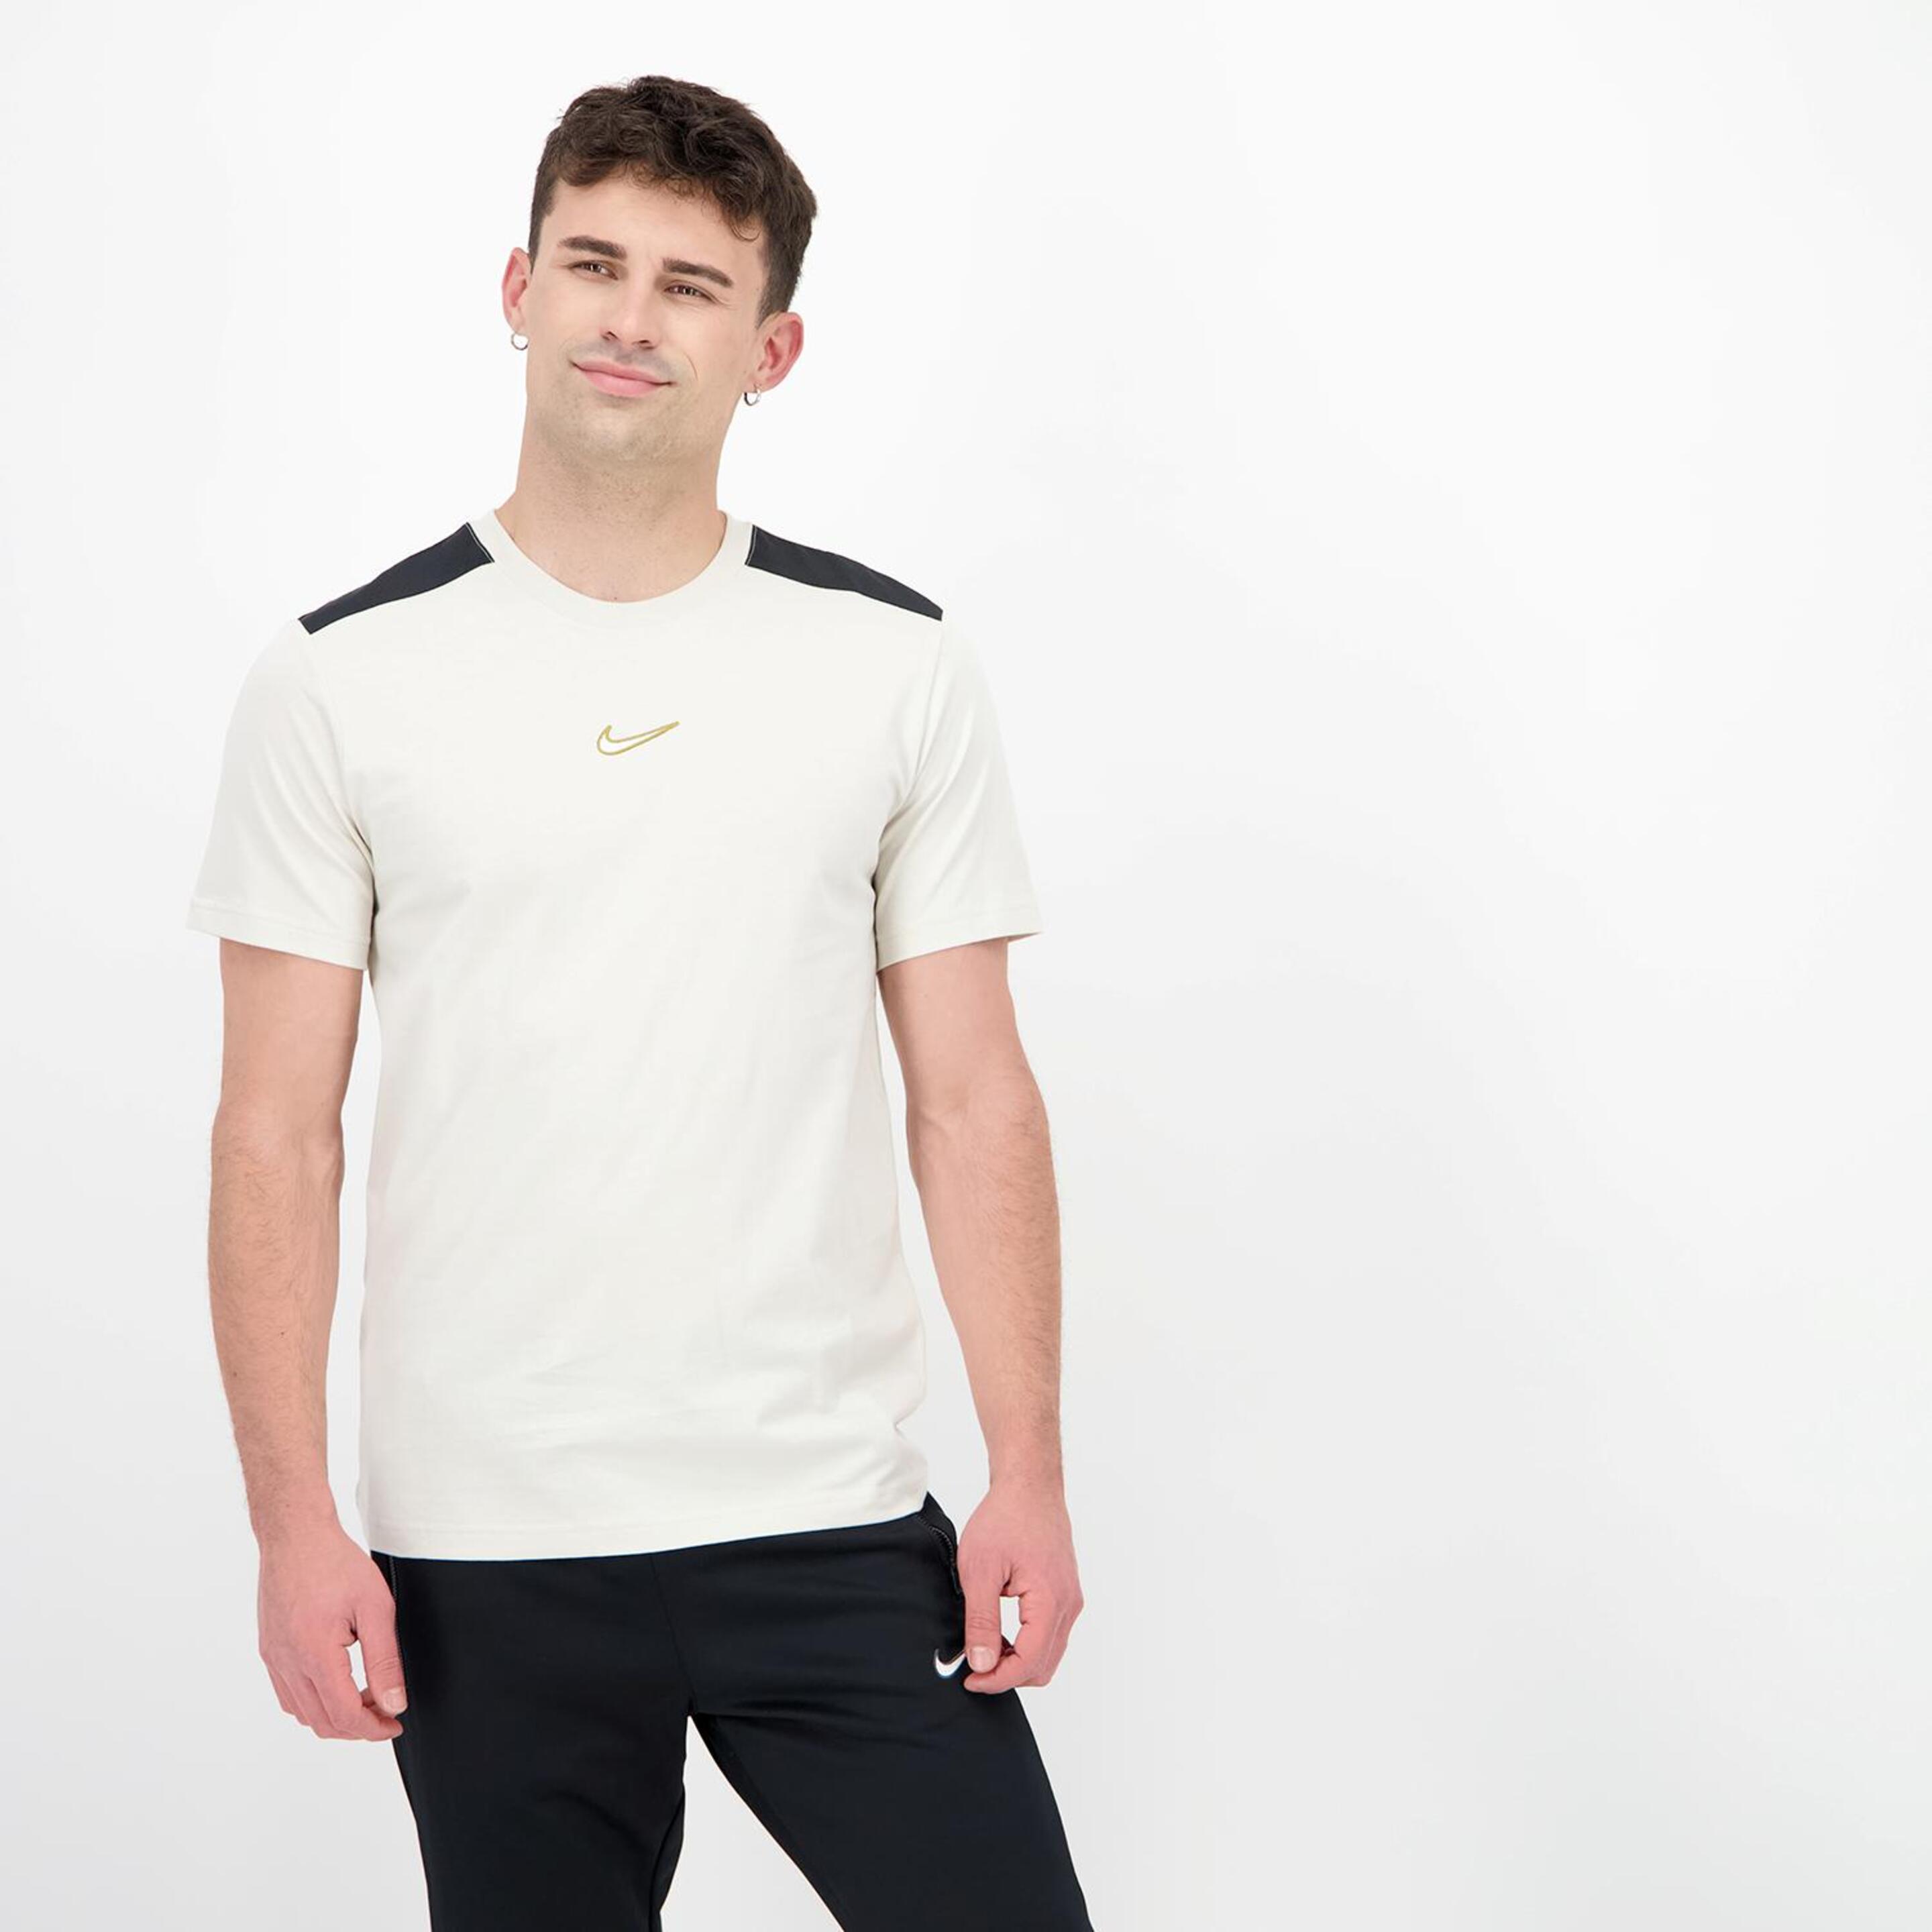 Nike Sp - marron - Camiseta Hombre